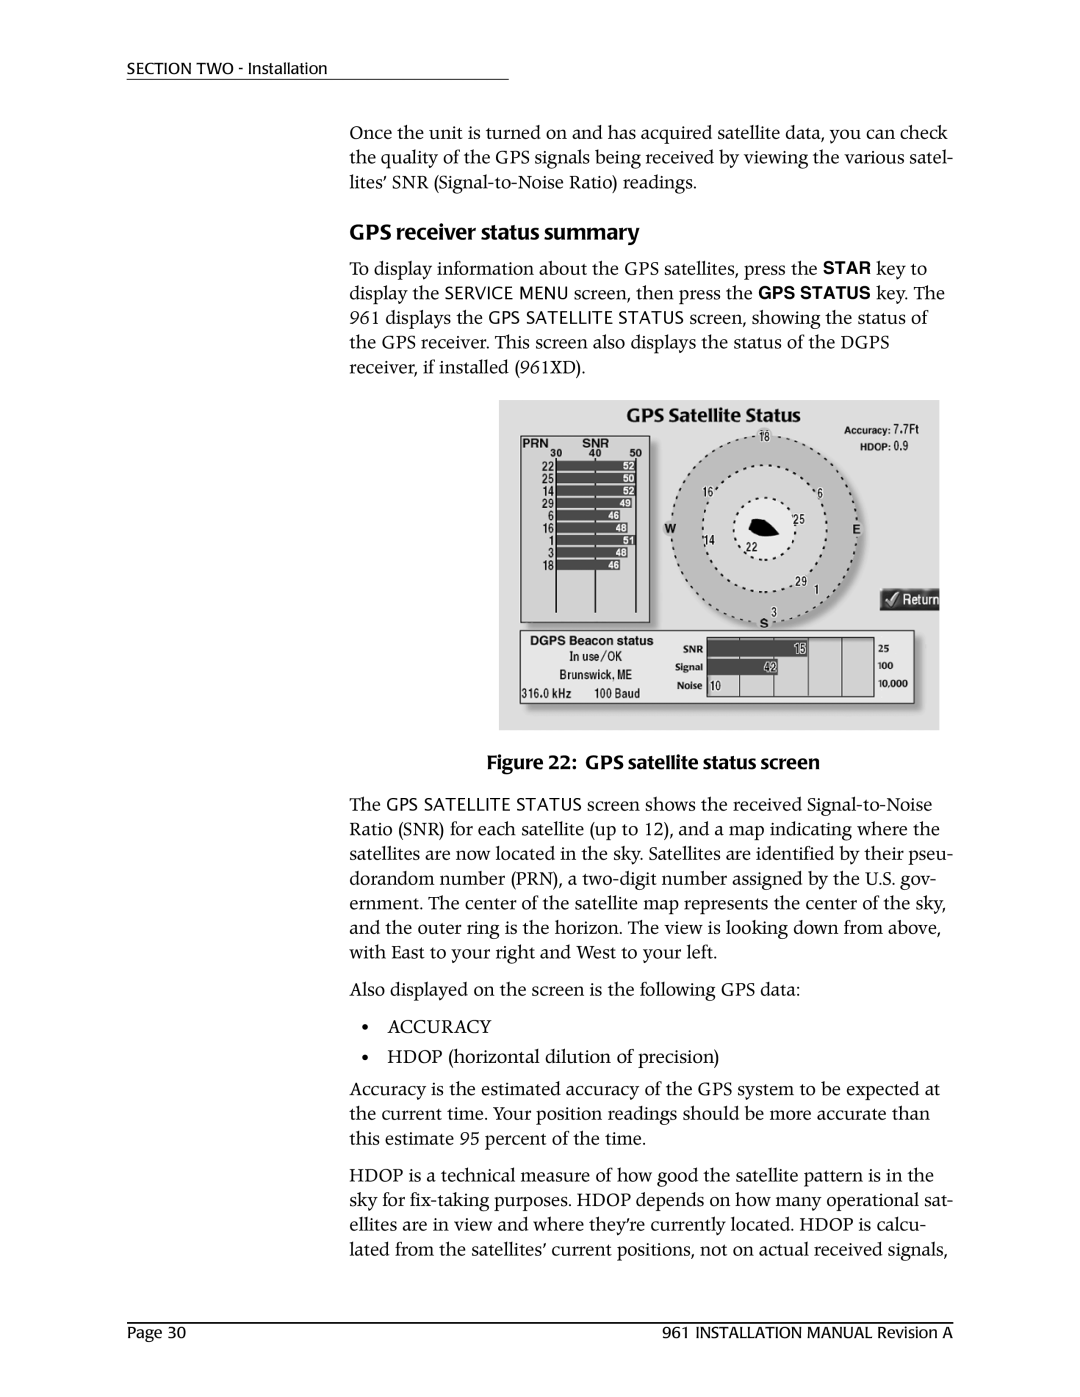 NorthStar Navigation 961XD installation manual GPS receiver status summary, Accuracy 